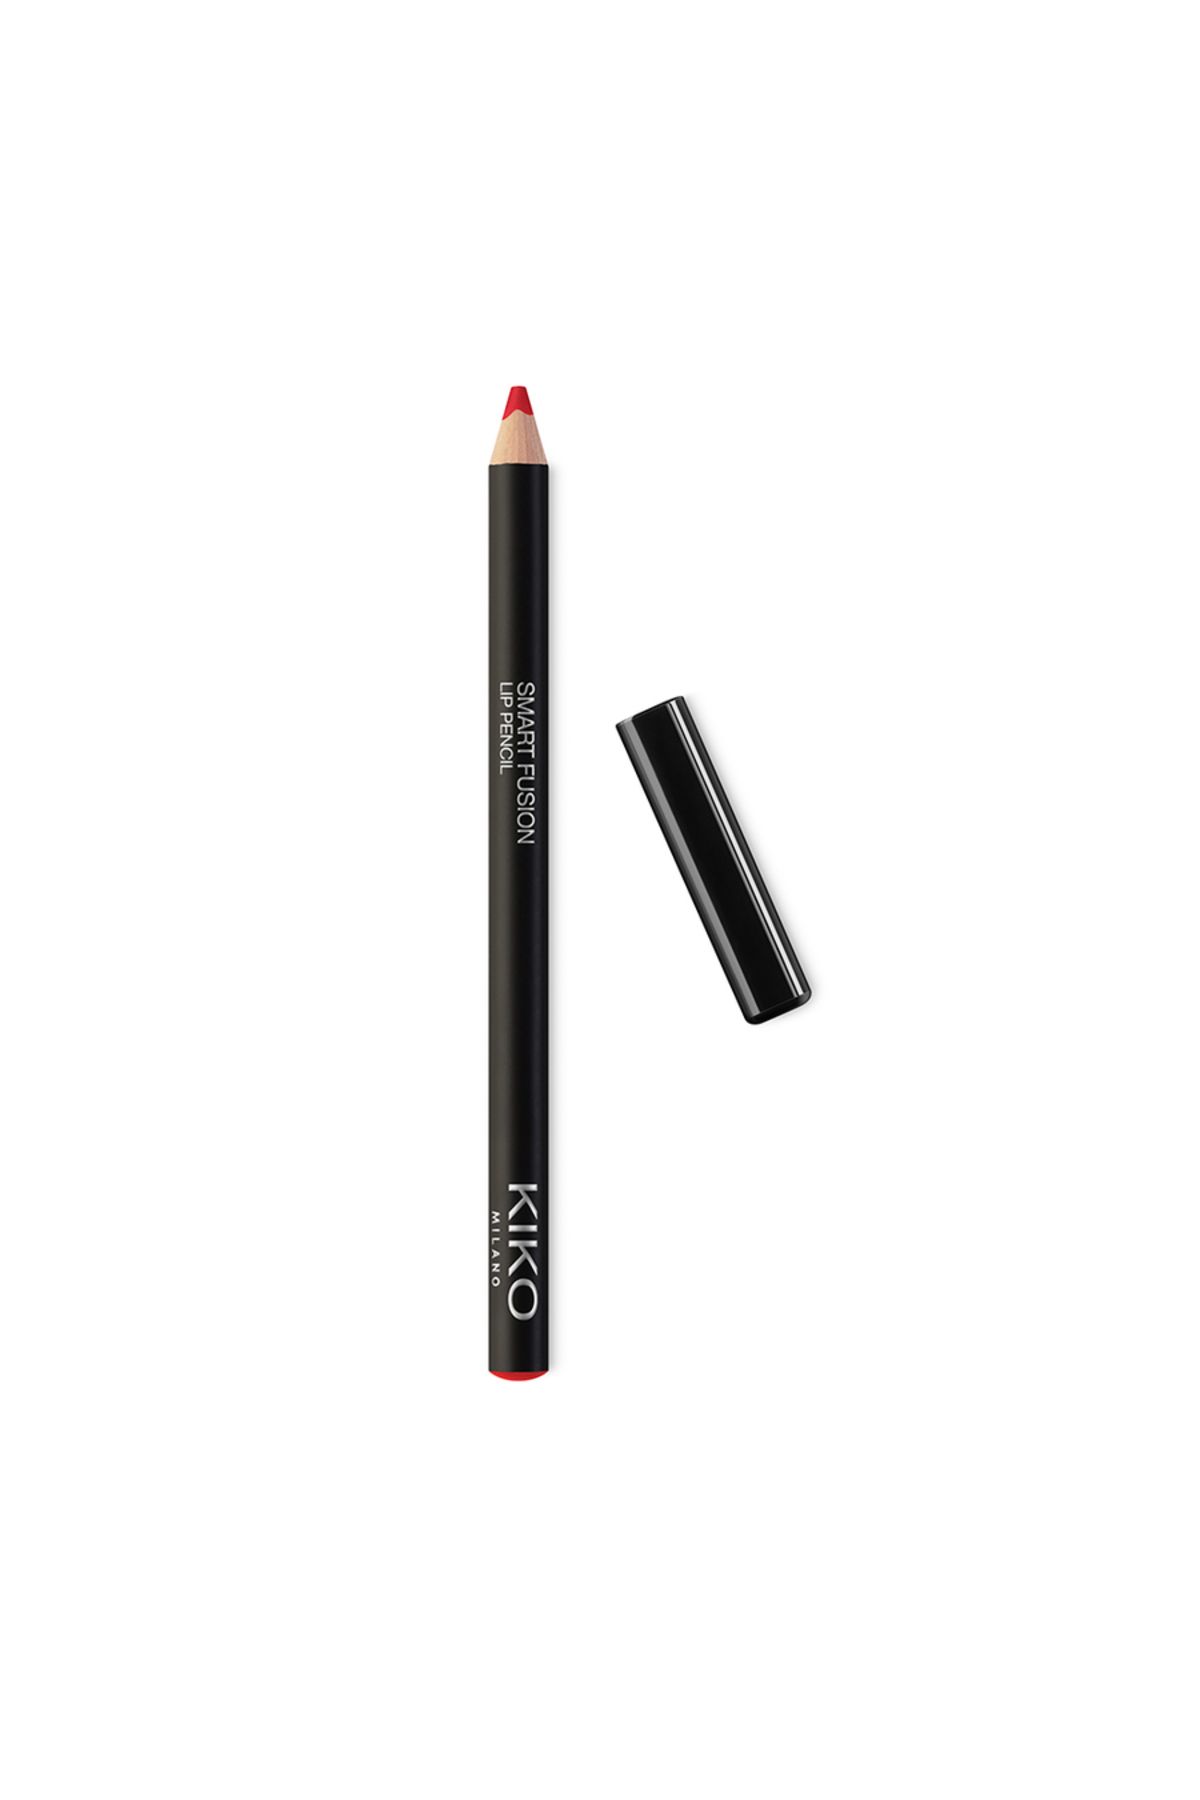 KIKO DUDAK KALEMİ - Smart Fusion Lip Pencil - 515 Raspberry